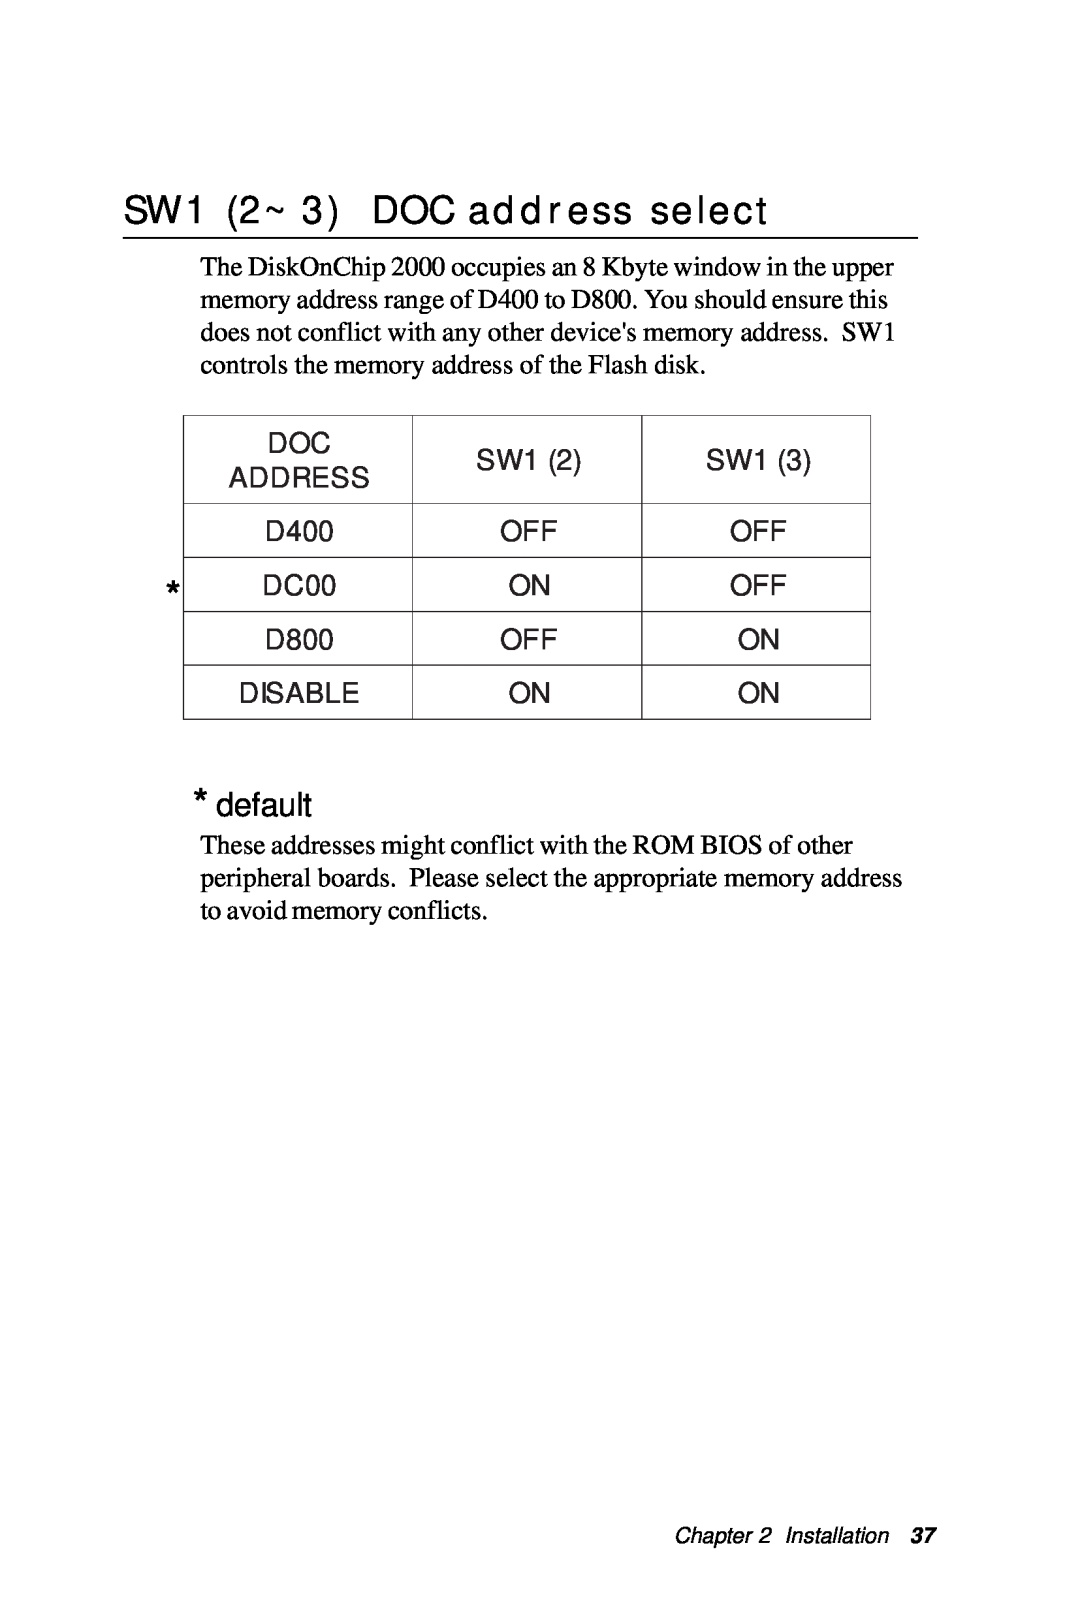 IBM All-in-One FC/Socket 370 Celeron, PCM-6890B manual SW1 2~3 DOC address select, default 